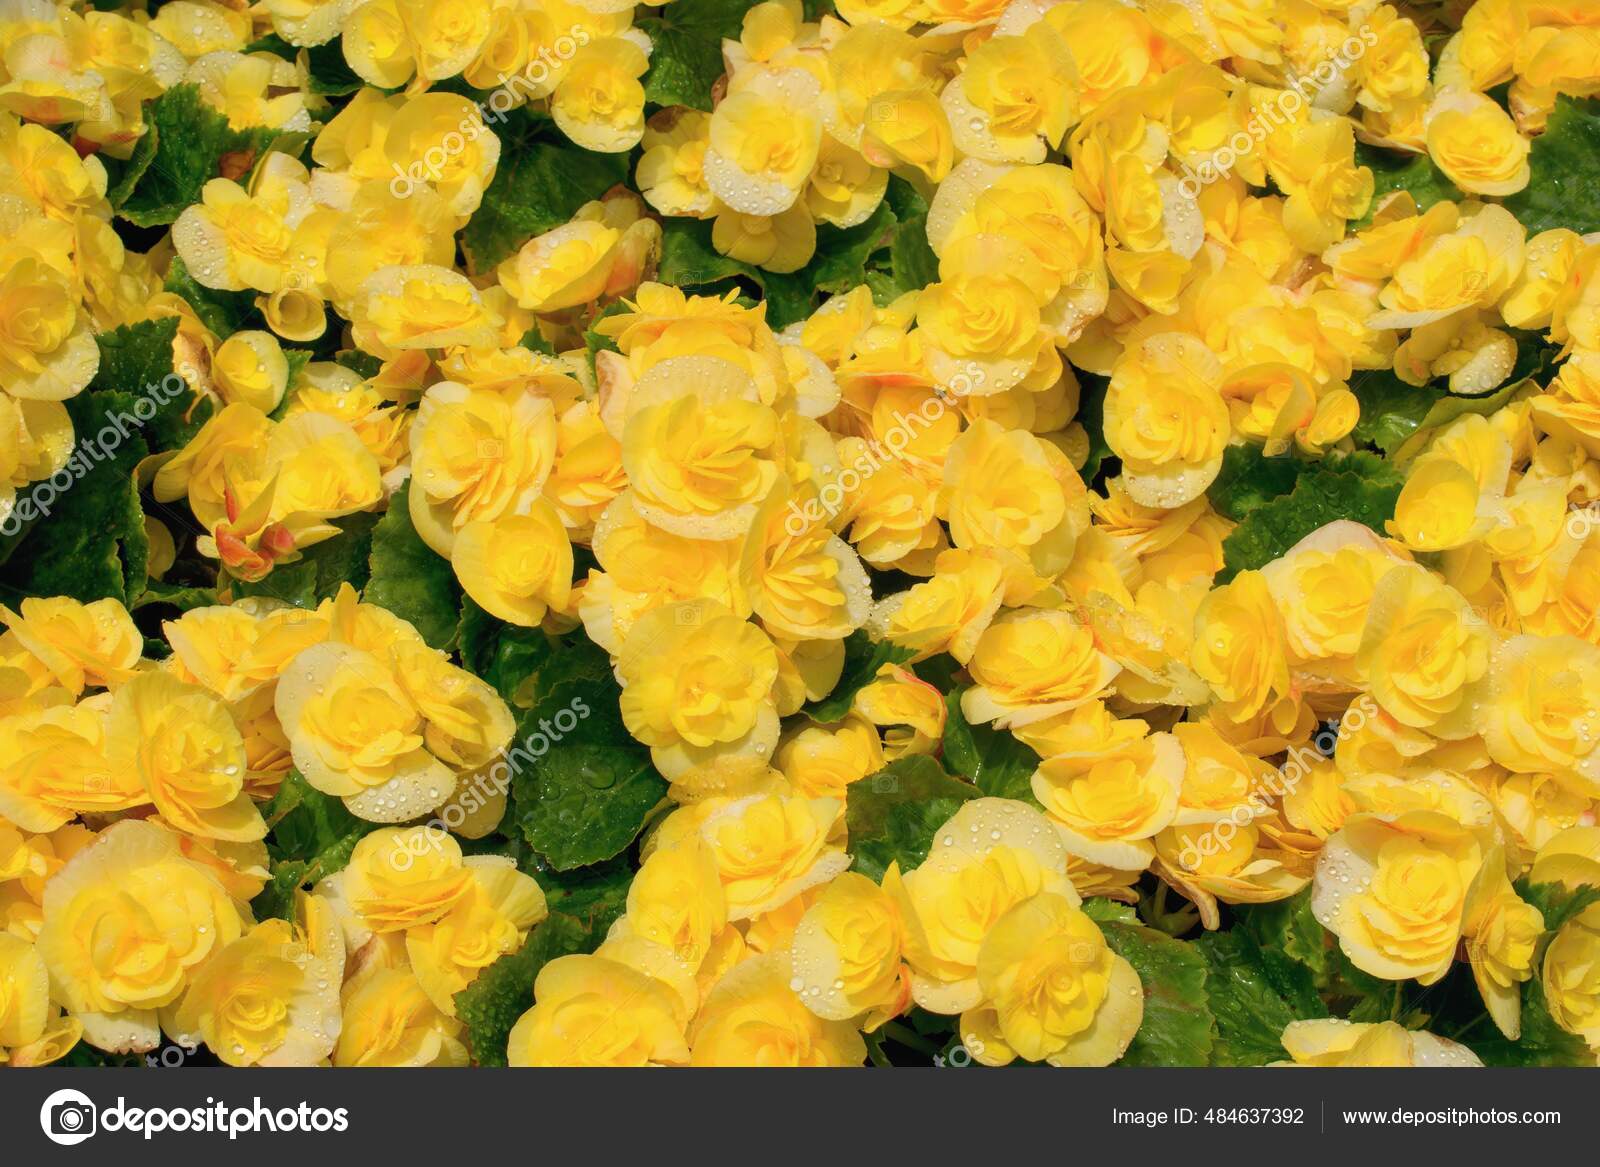 Begonia x hiemalis Stock Photos, Royalty Free Begonia x hiemalis Images |  Depositphotos